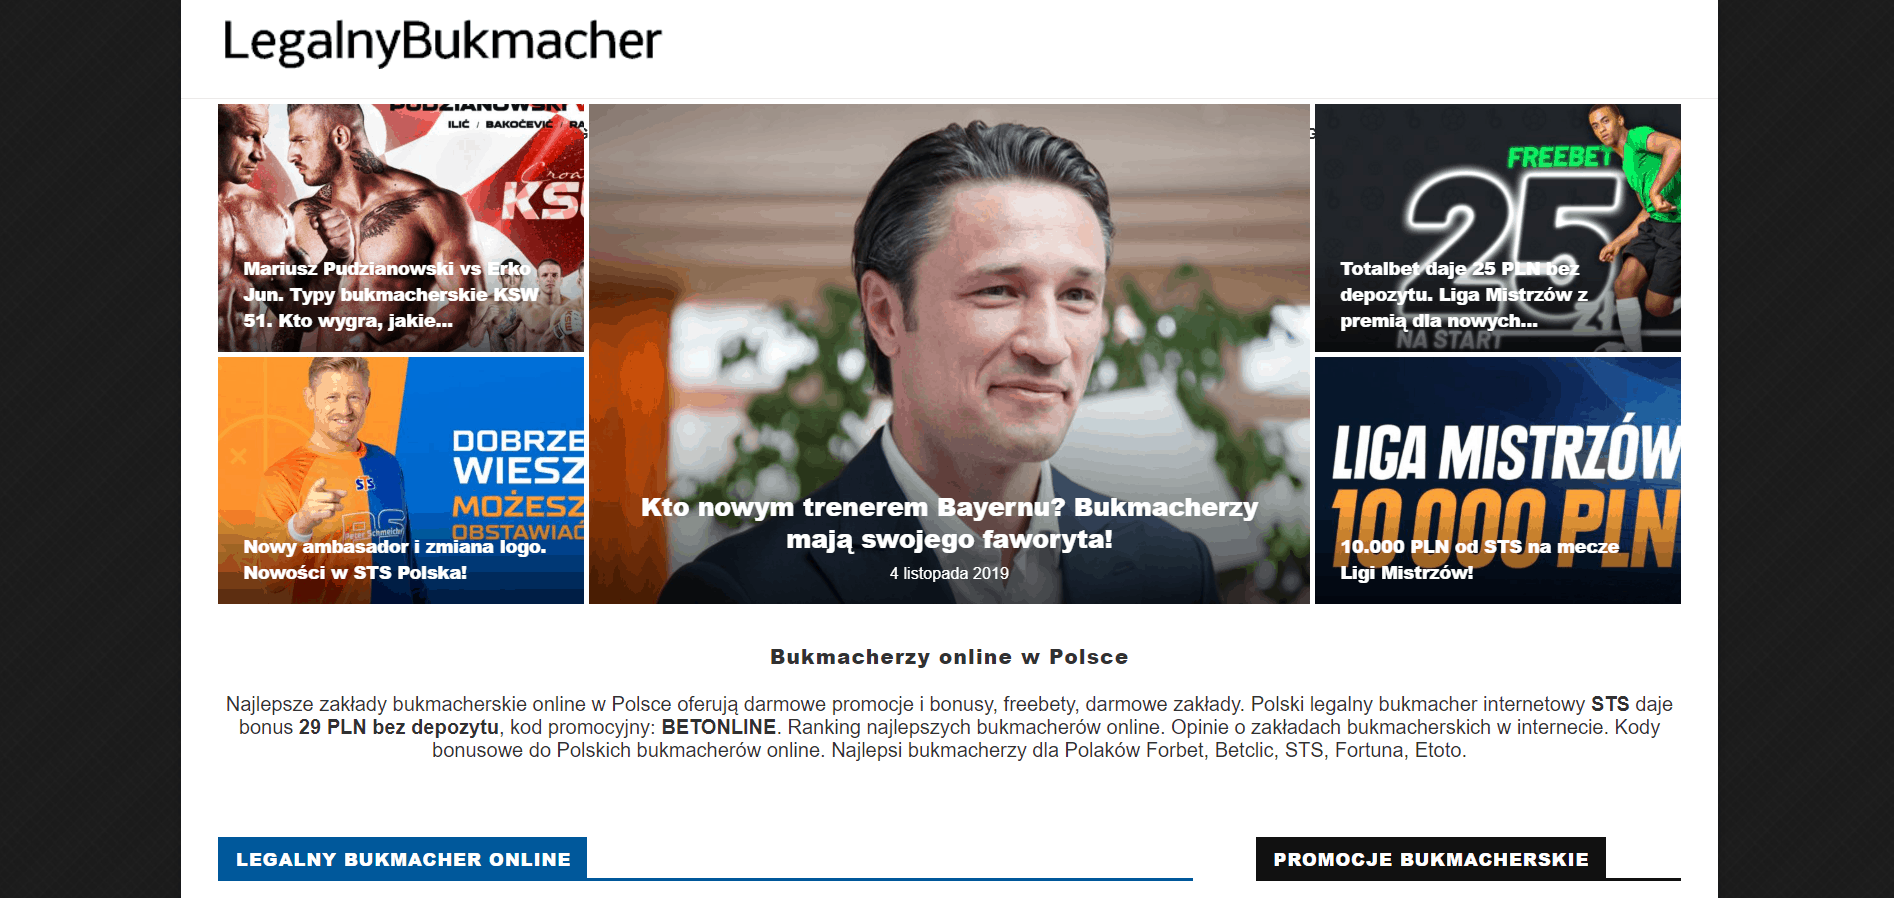 LEGALNYBUKMACHER.NET.PL